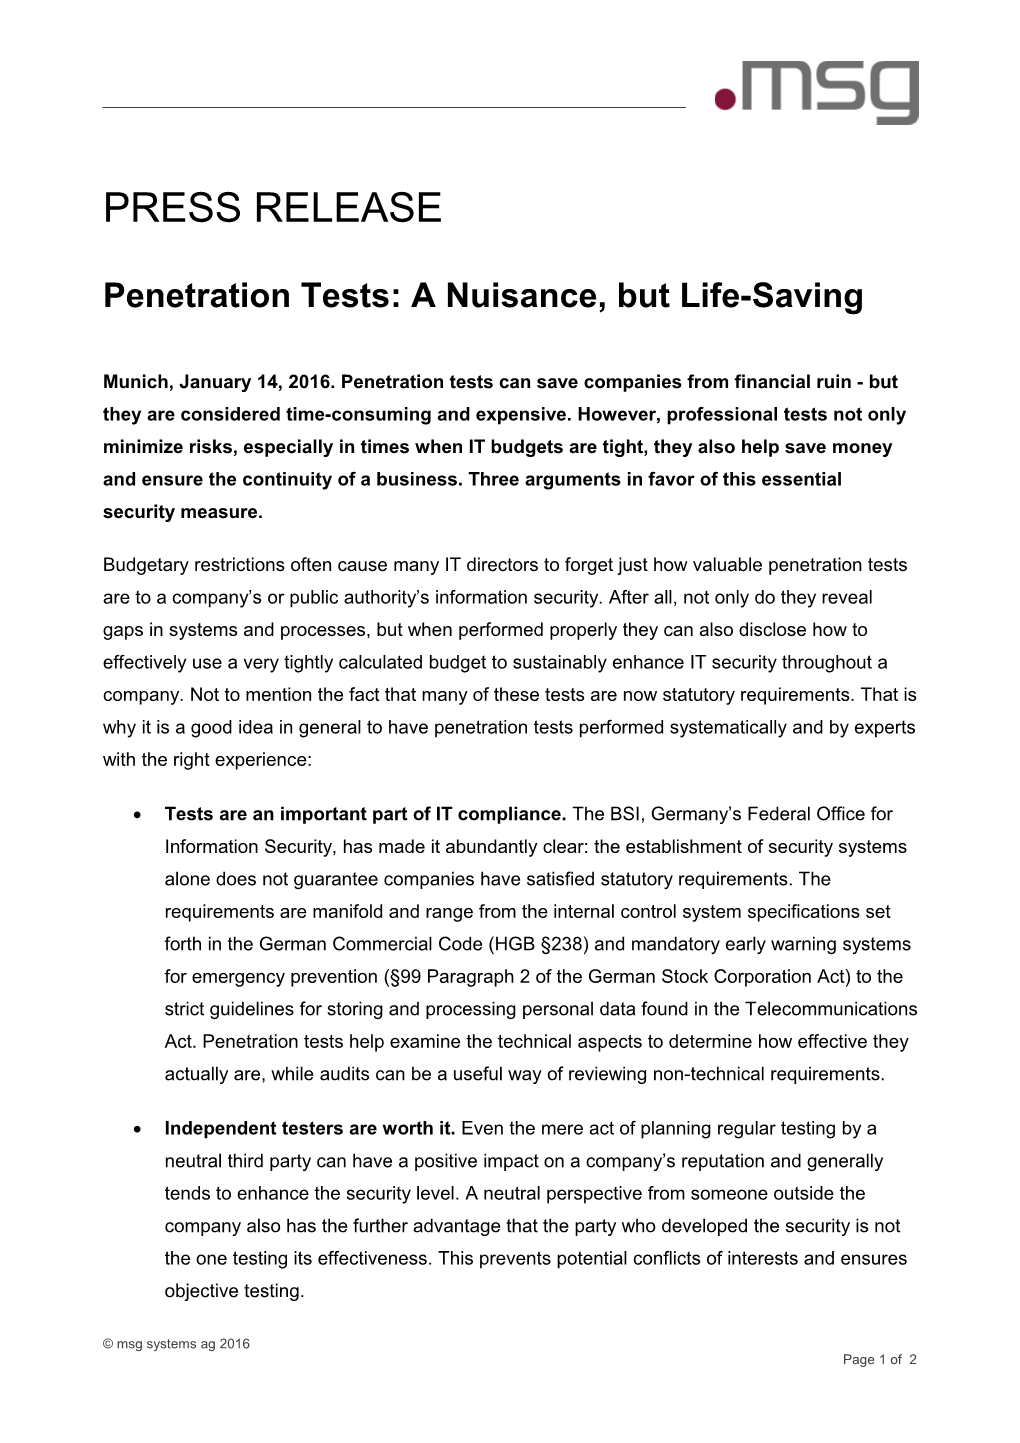 Penetration Tests: a Nuisance, but Life-Saving